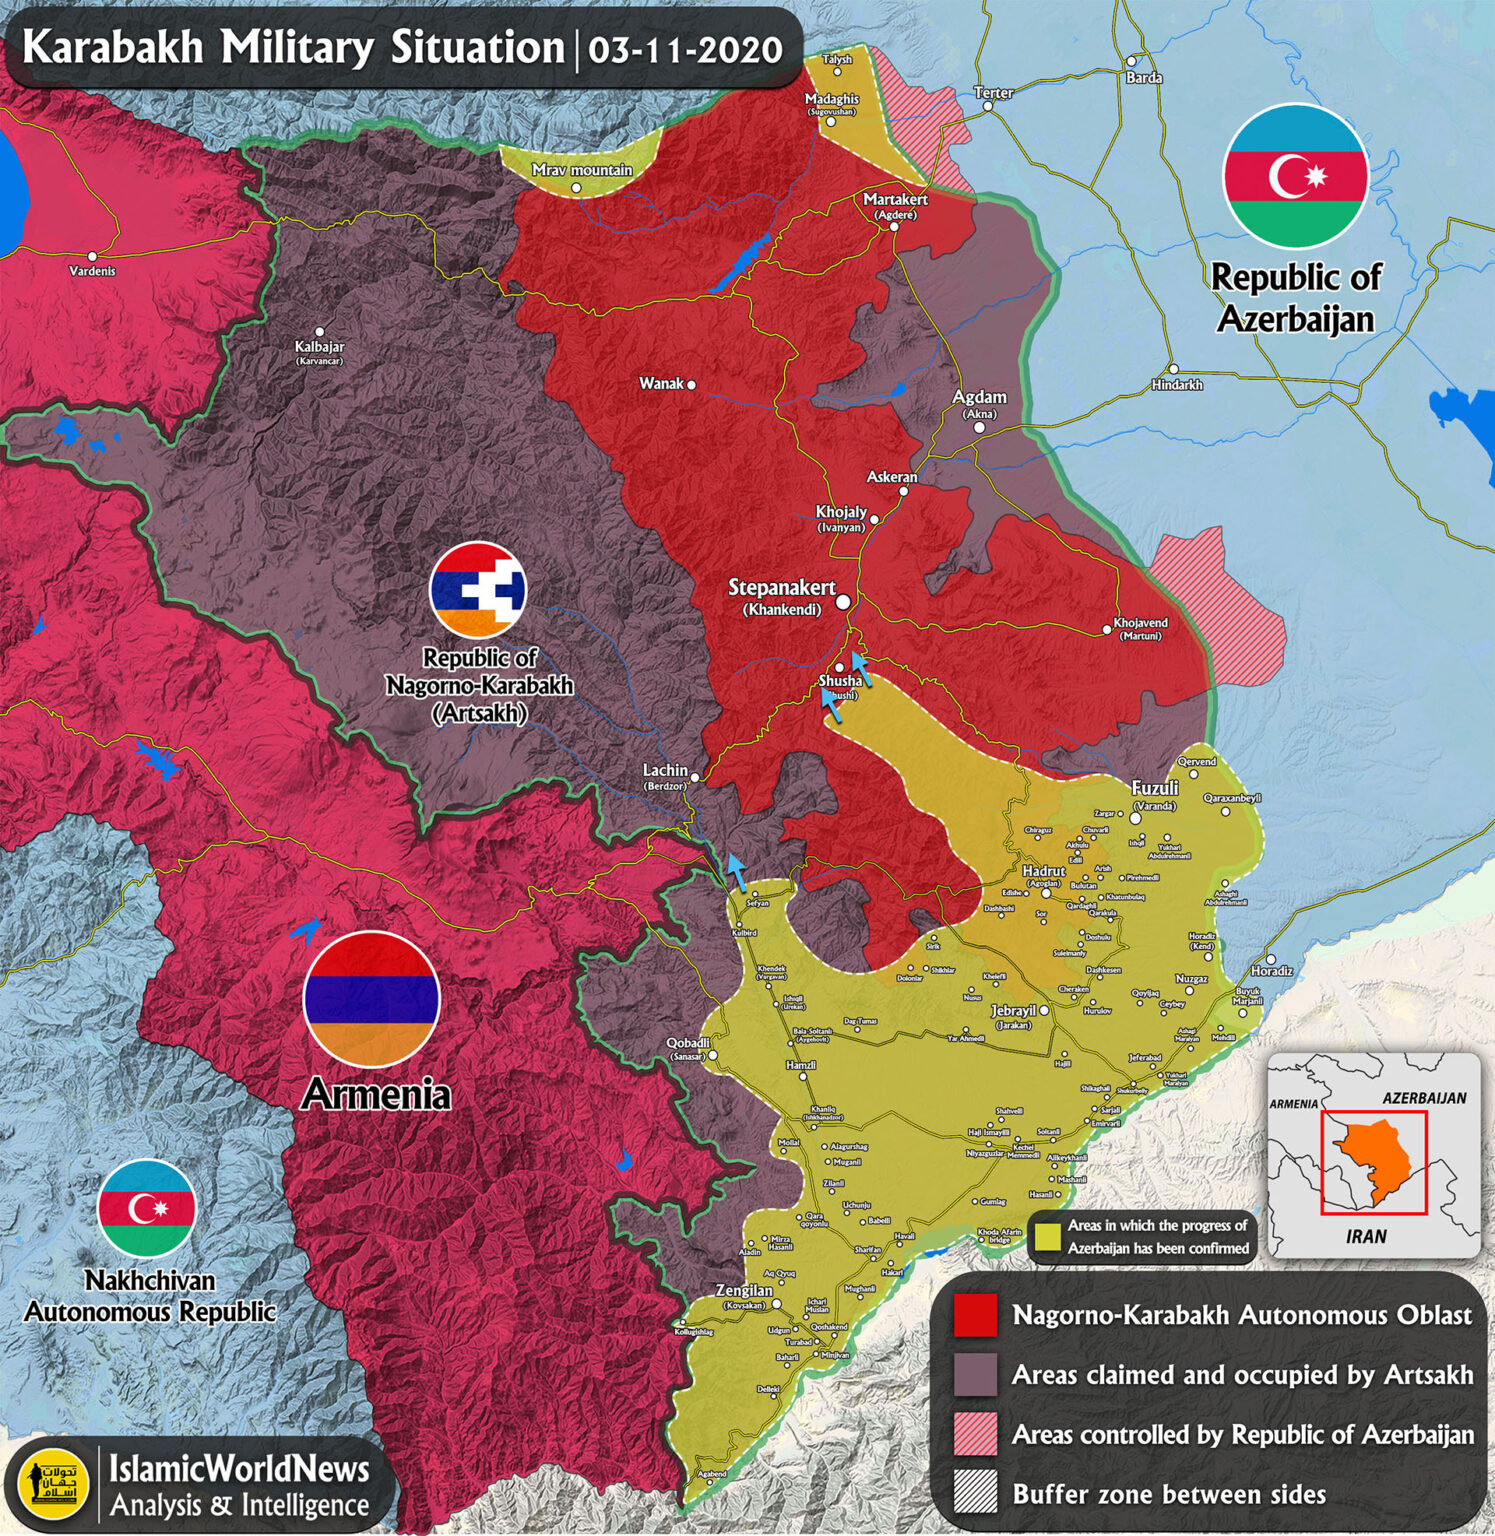 19-Karabakh-map-3nov20-13aba99-en-1495x1536.jpg